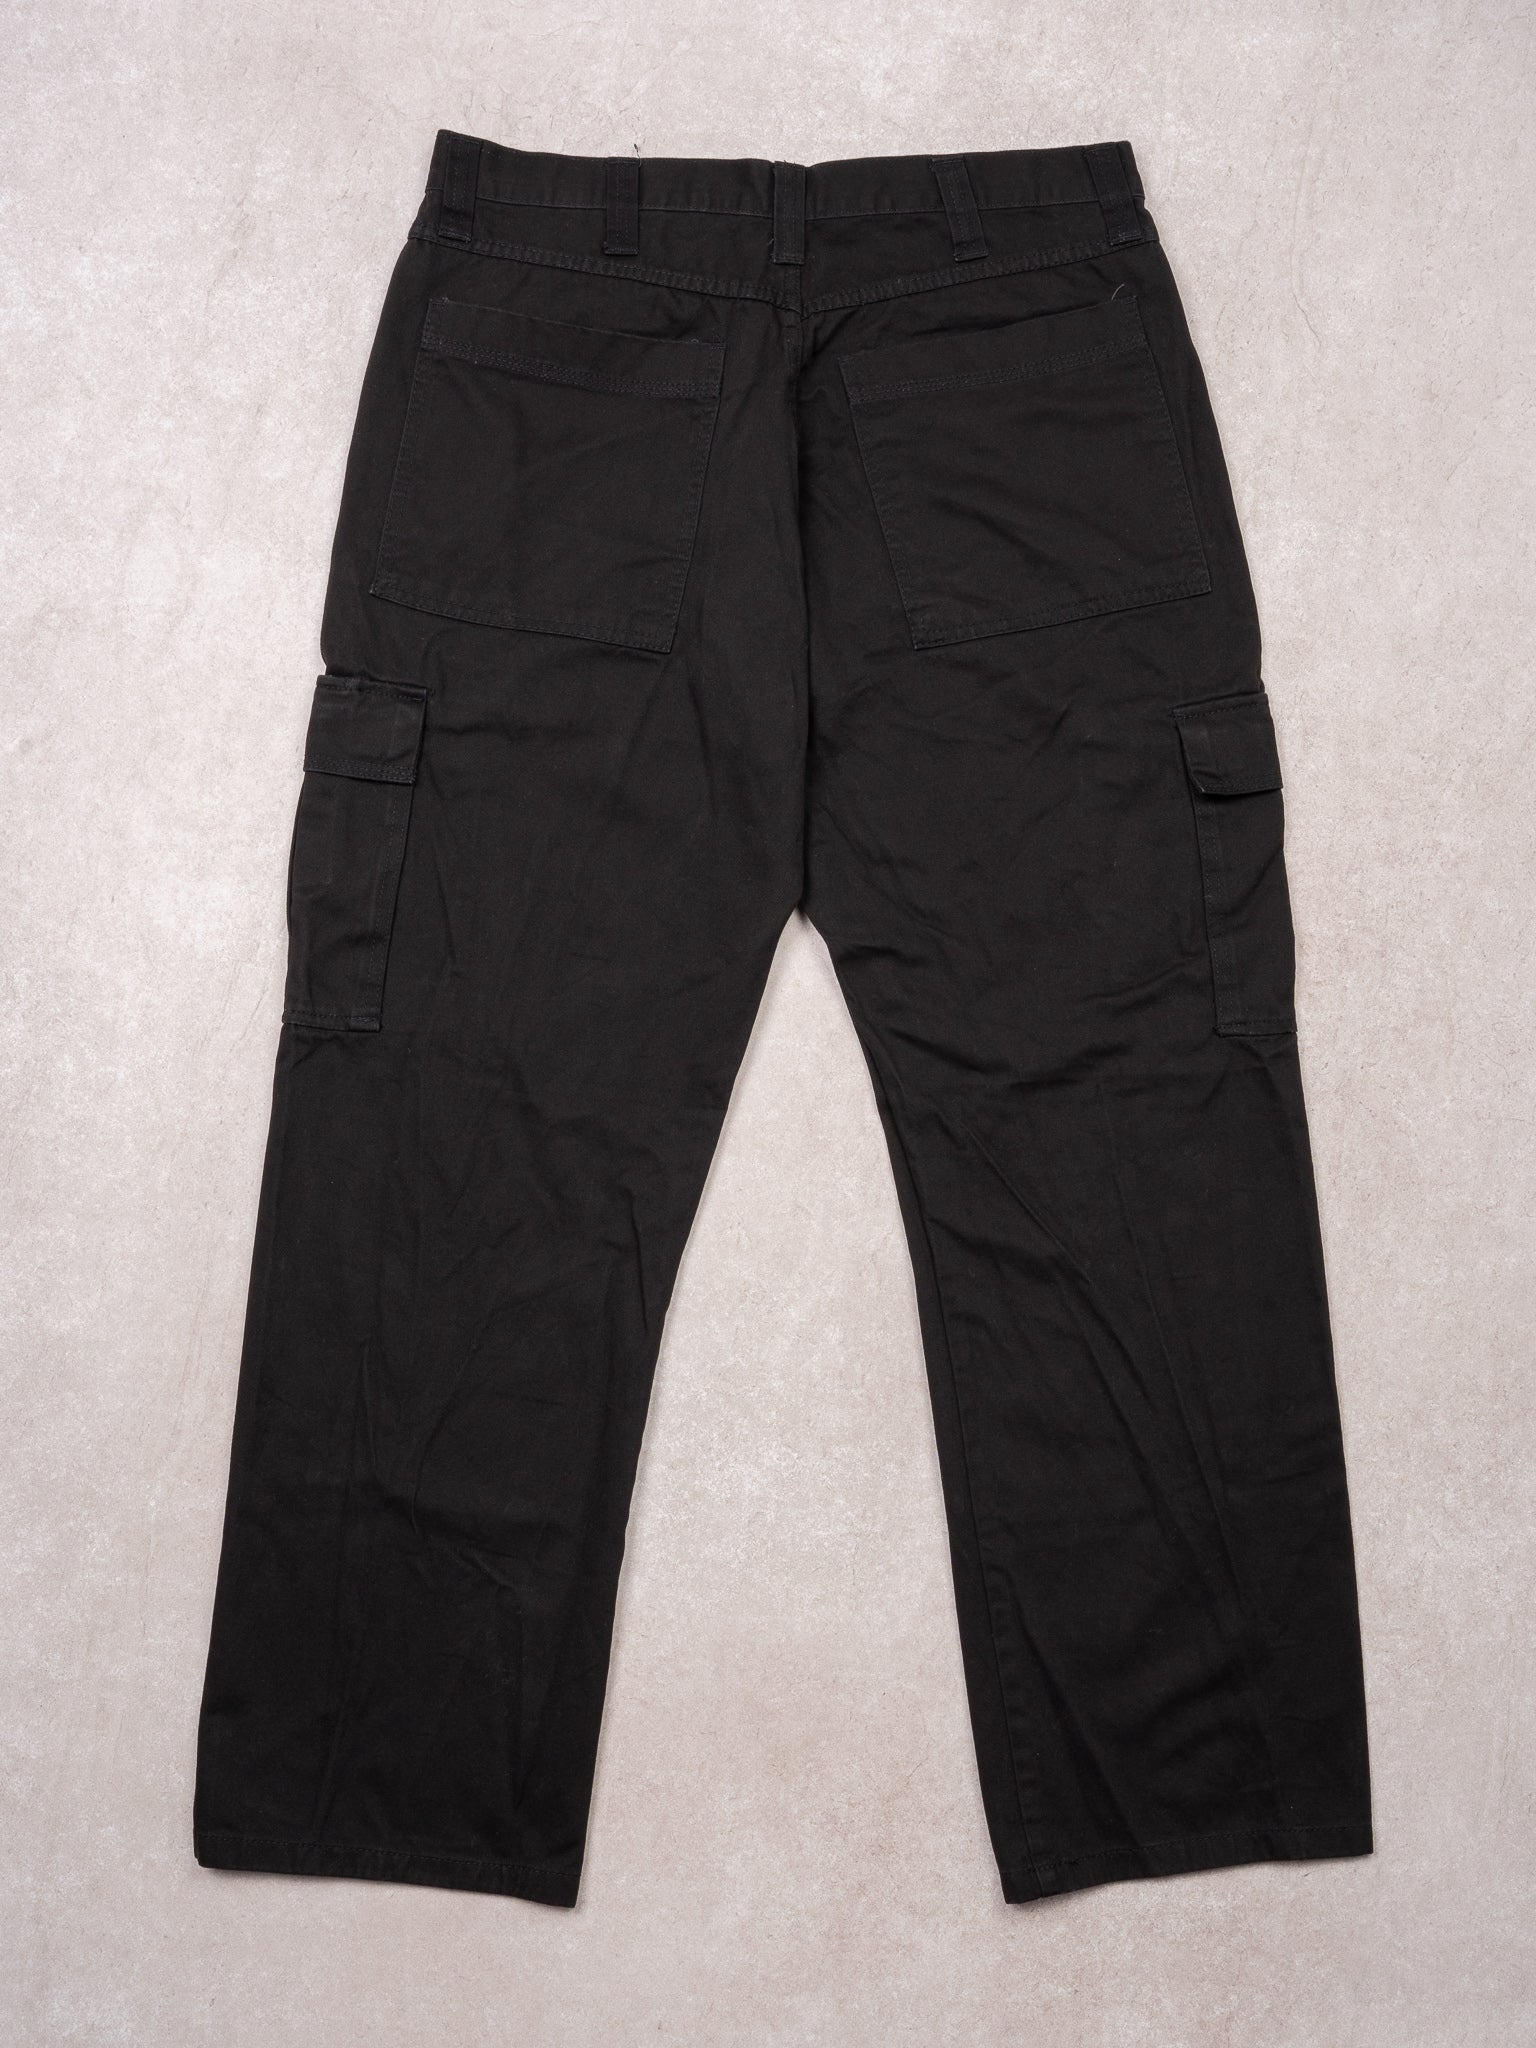 Vintage Black Wrangler Cargo Pants 2.0 (34 x 30)